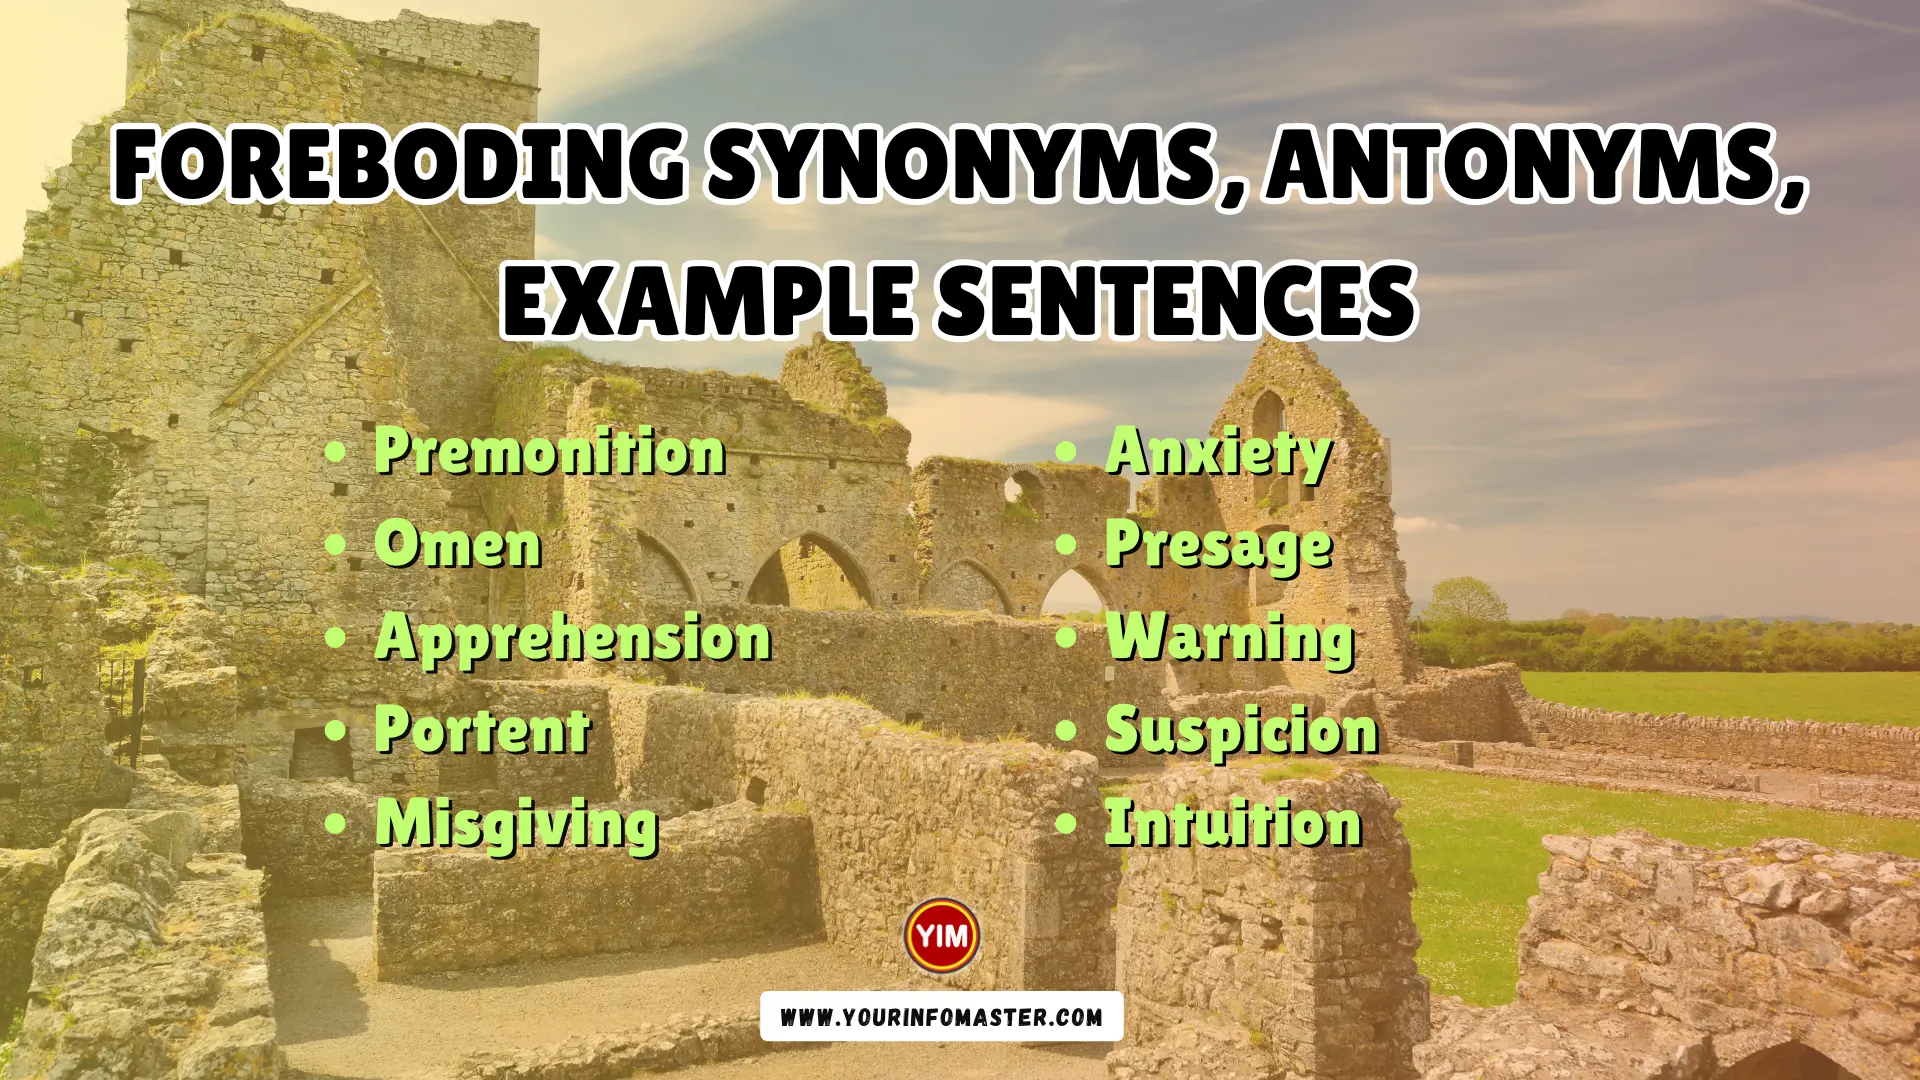 Foreboding Synonyms, Antonyms, Example Sentences